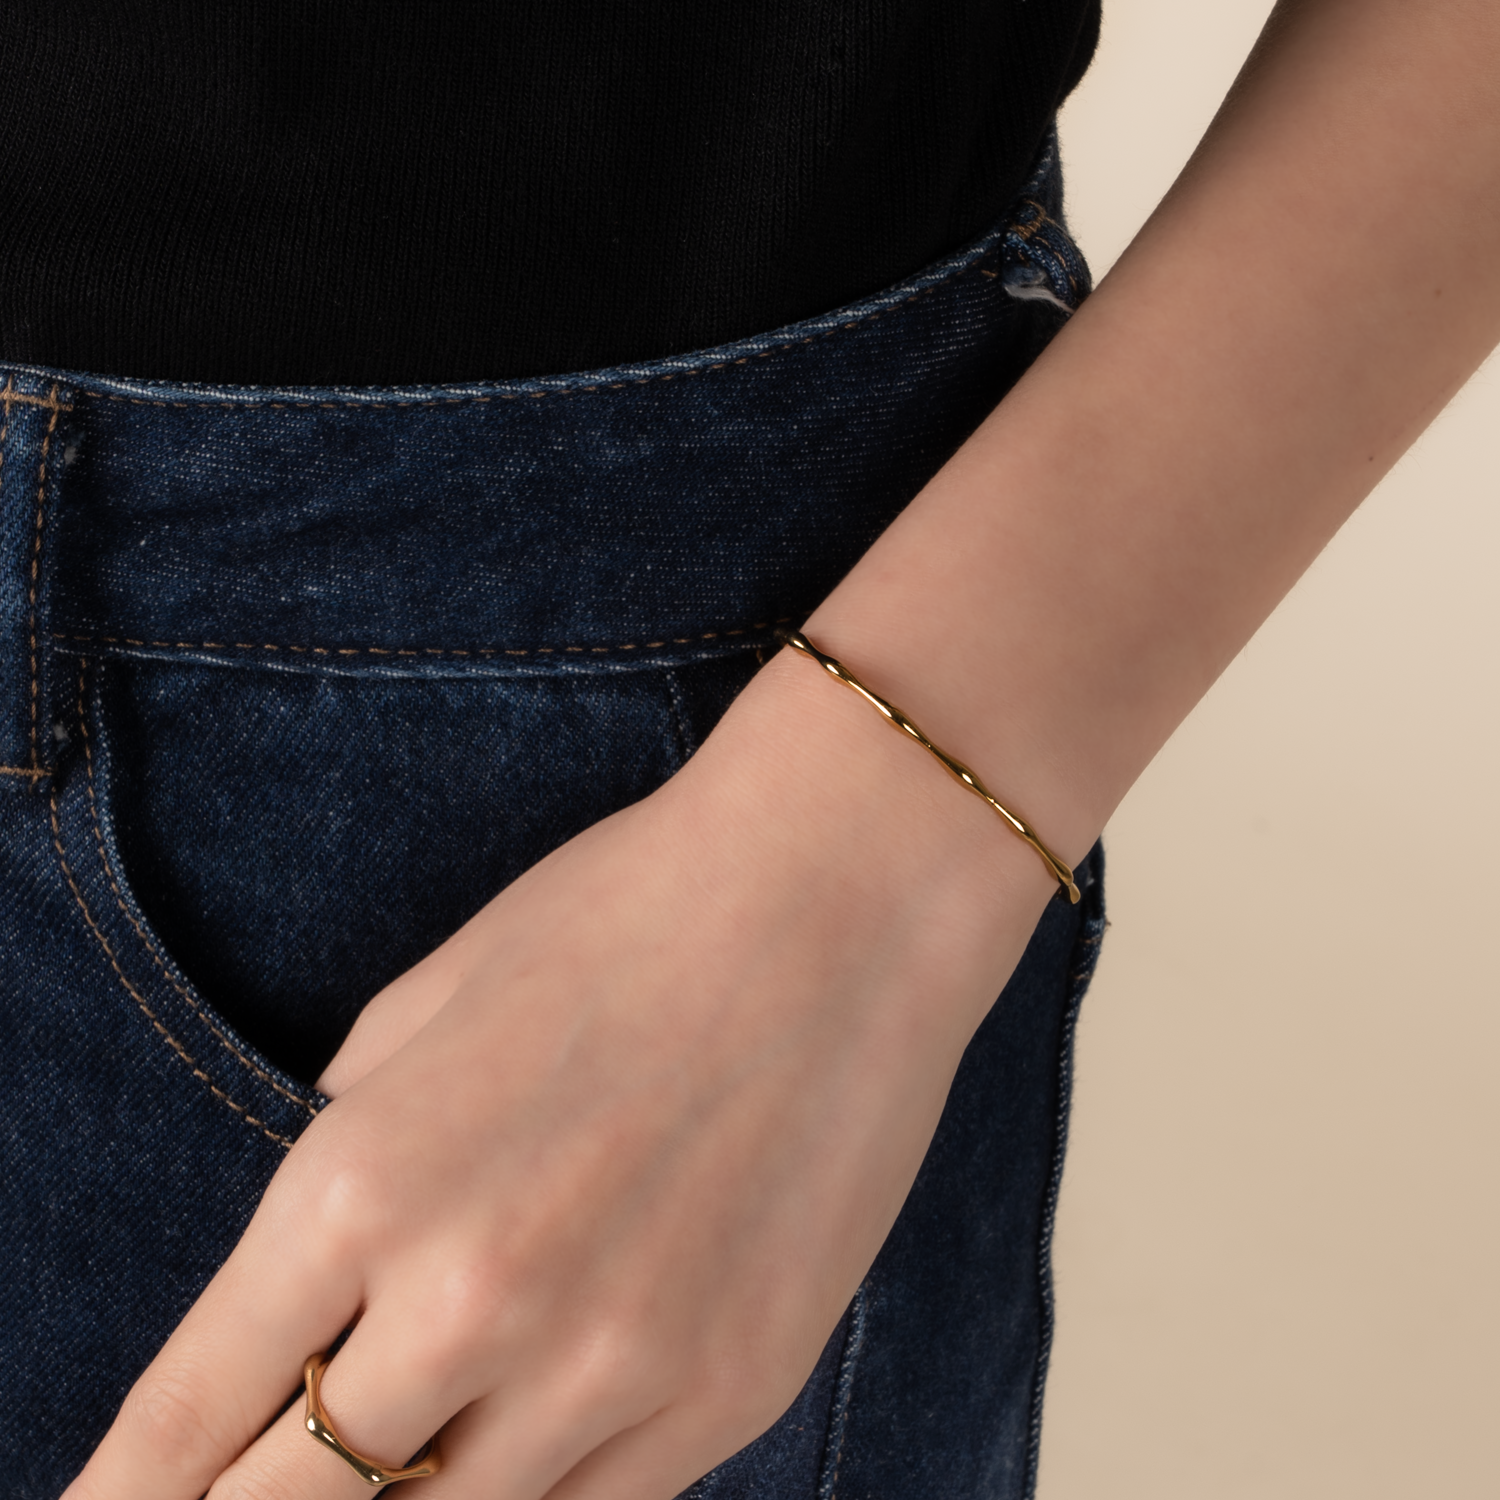 Model is wearing minimalist and sleek bangle in gold.